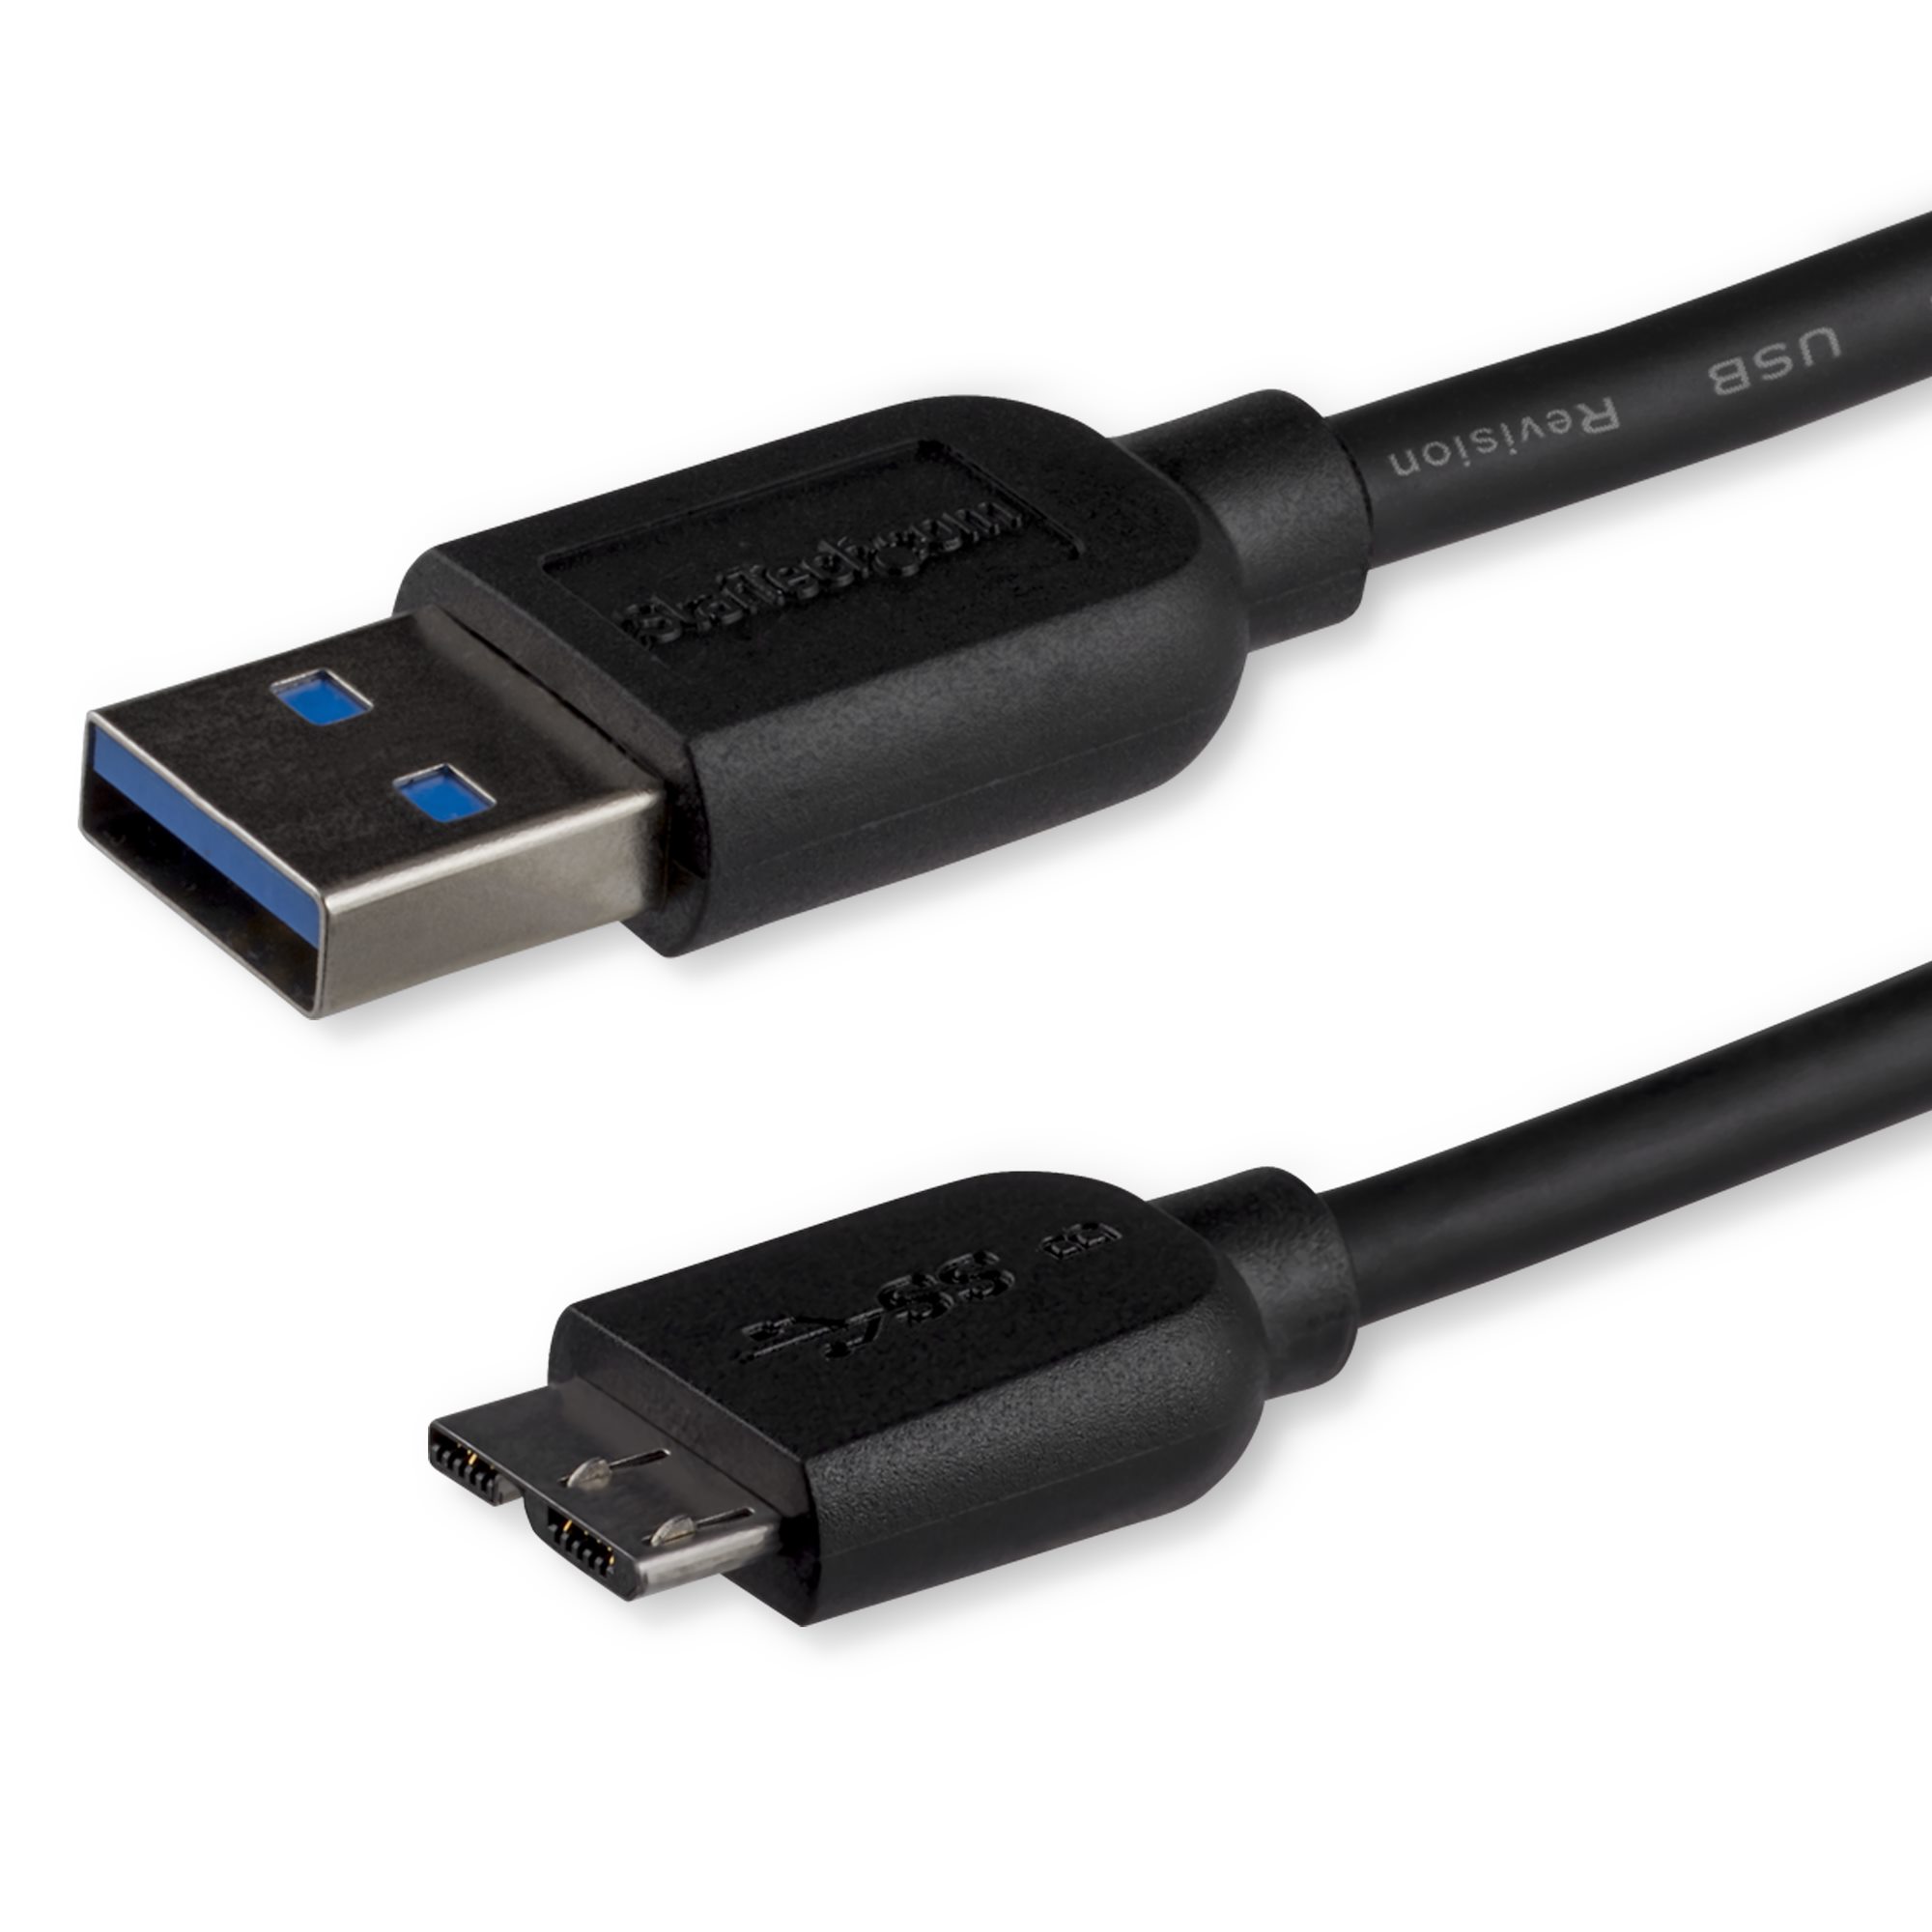 10ft Slim USB 3.0 Micro B Cable - M/M - USB 3.0 Cables | StarTech.com